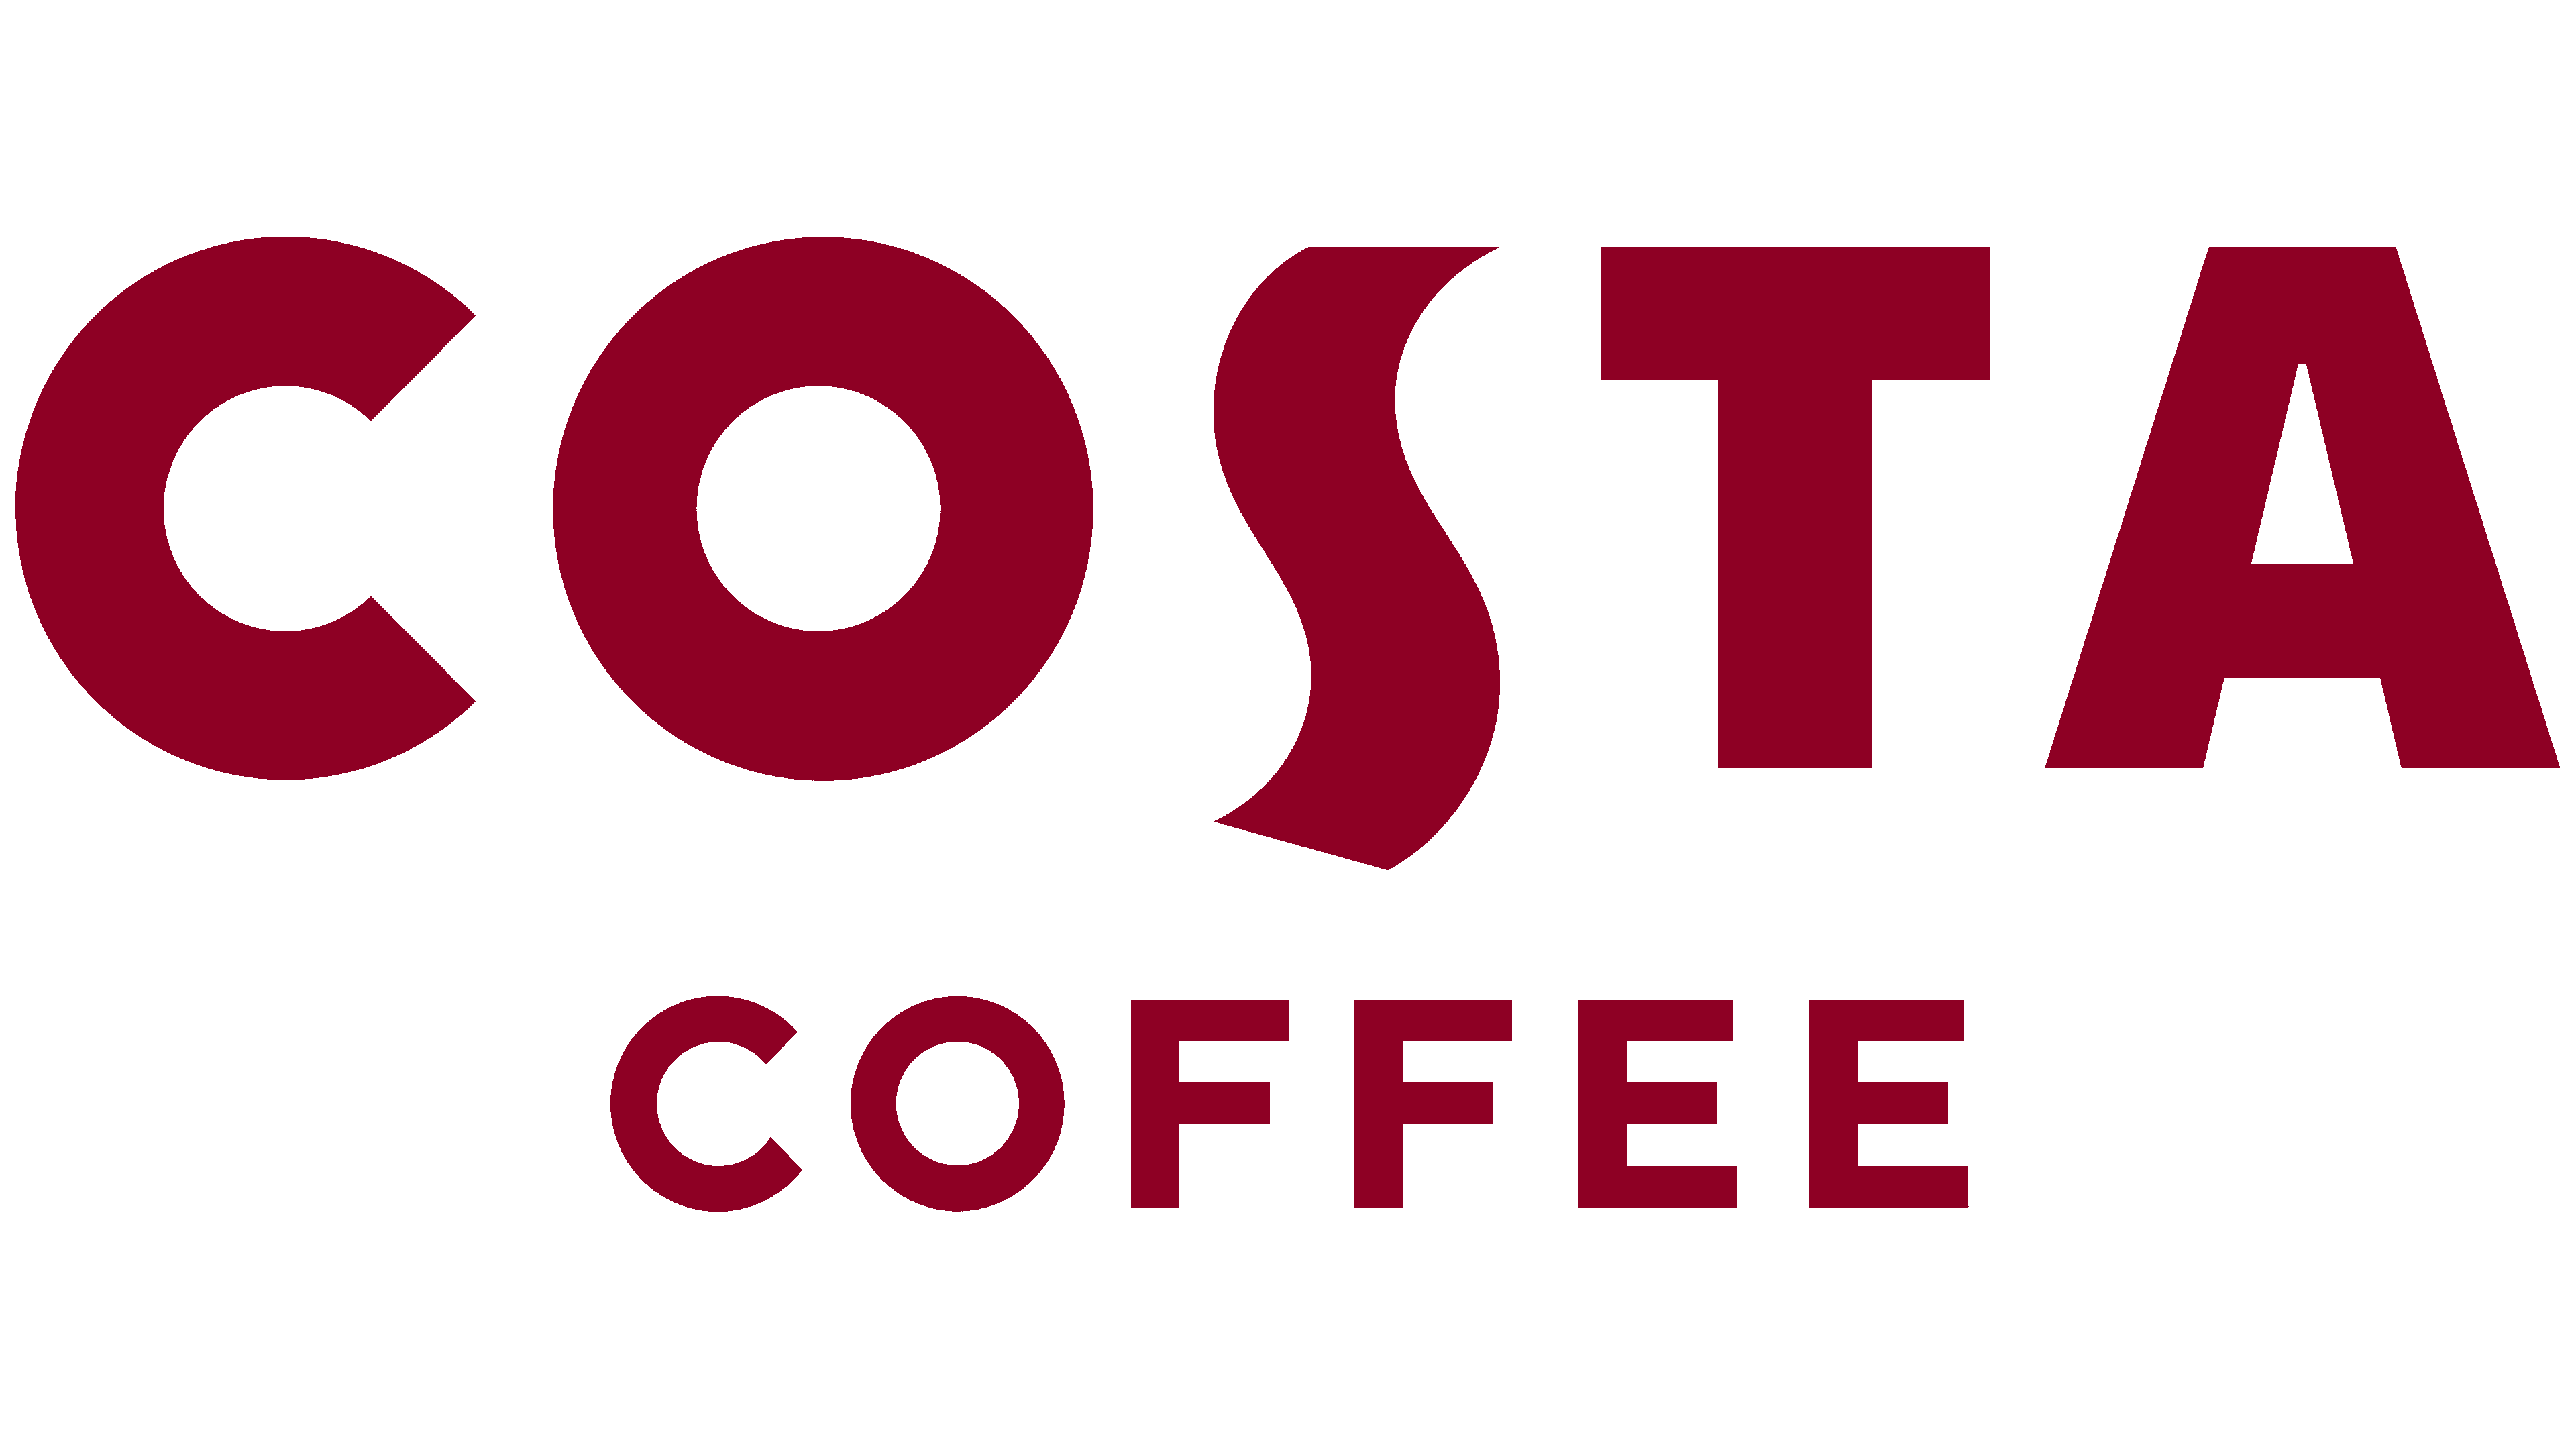 logo Costa Coffee